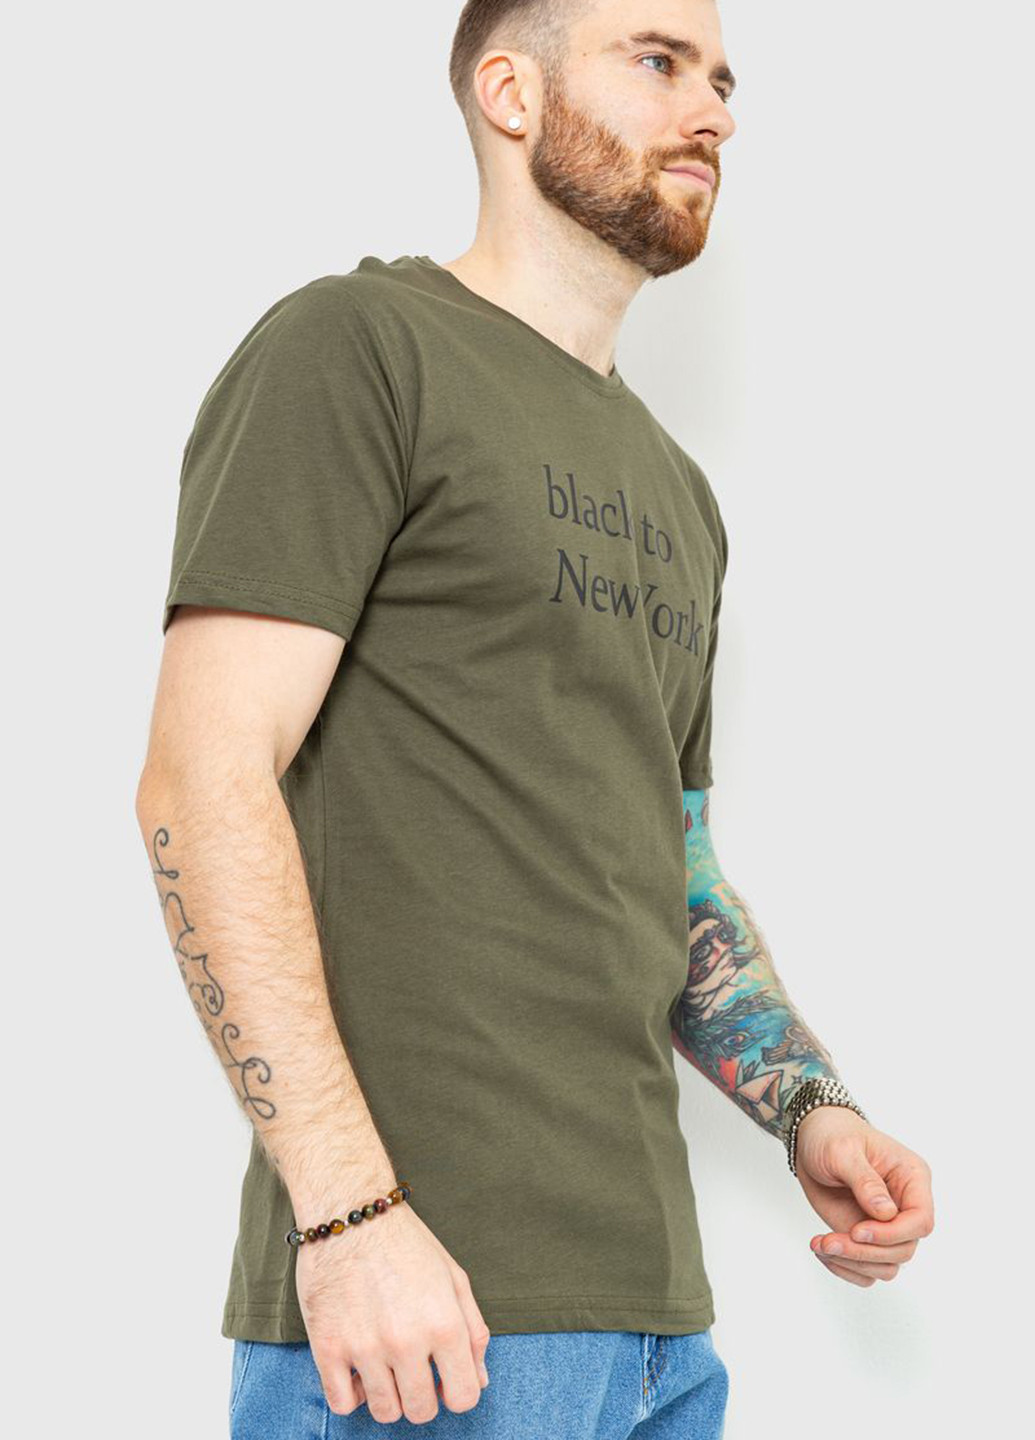 Хаки (оливковая) футболка Ager